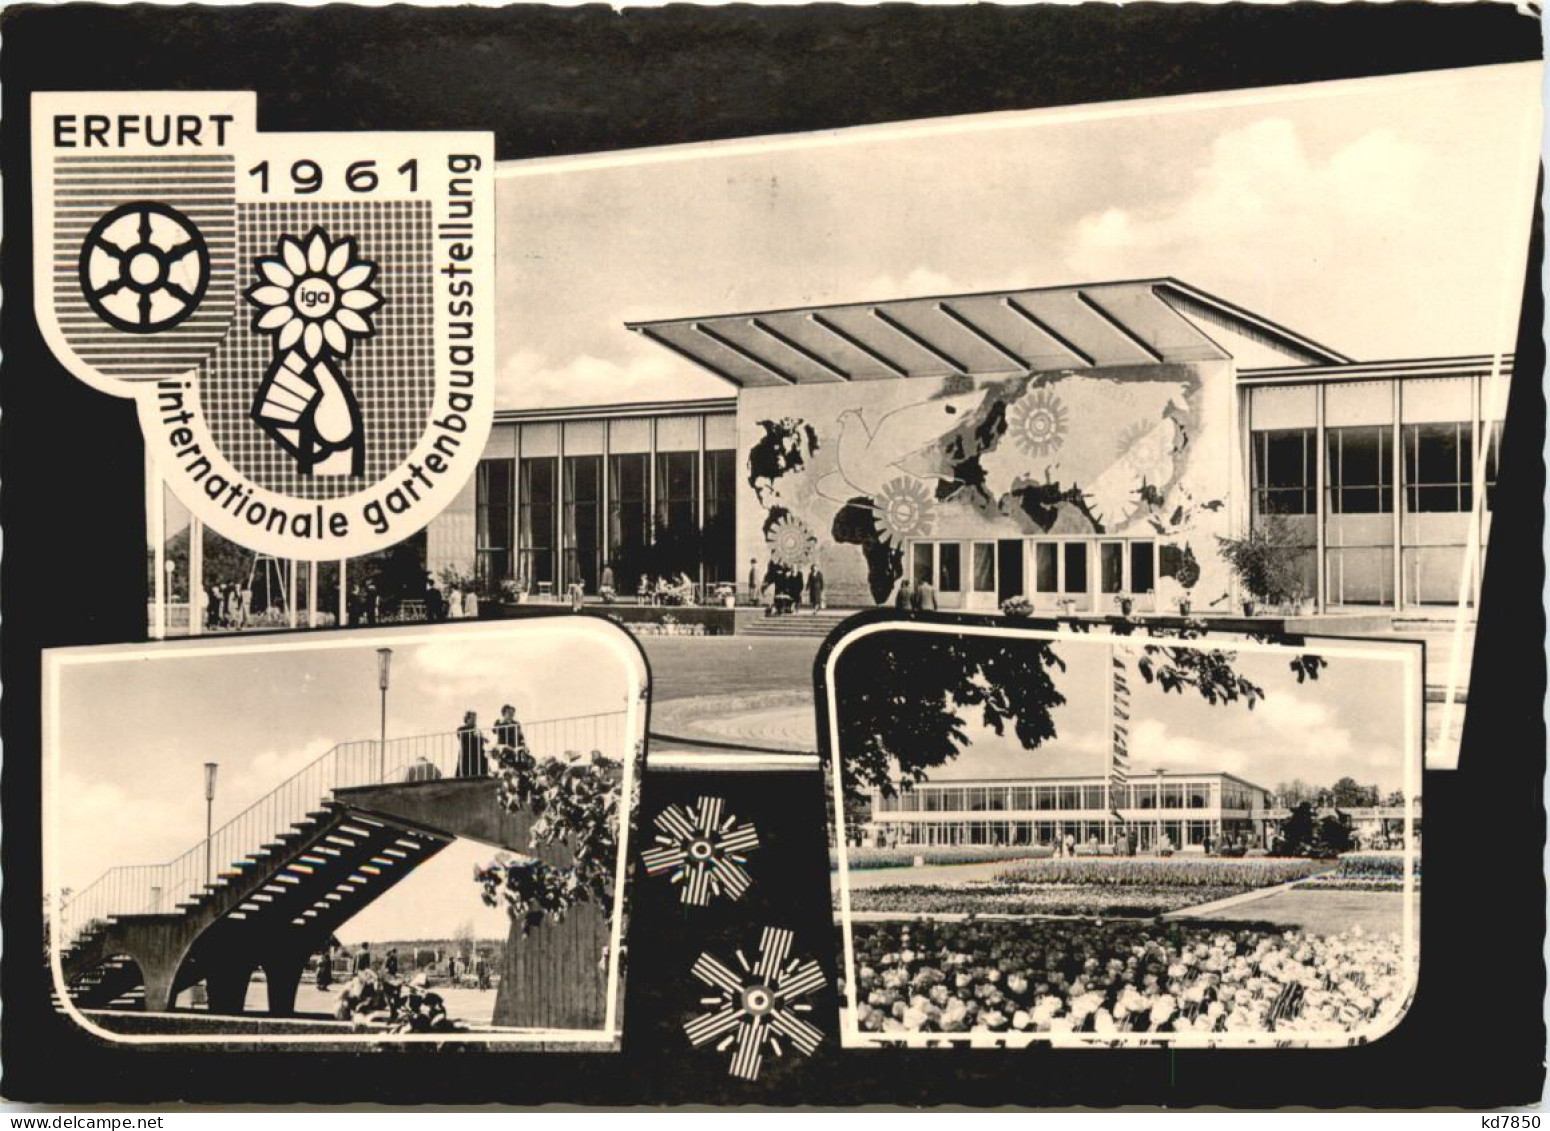 Erfurt, Internationale Gartenbauausstellung 1961 - Erfurt